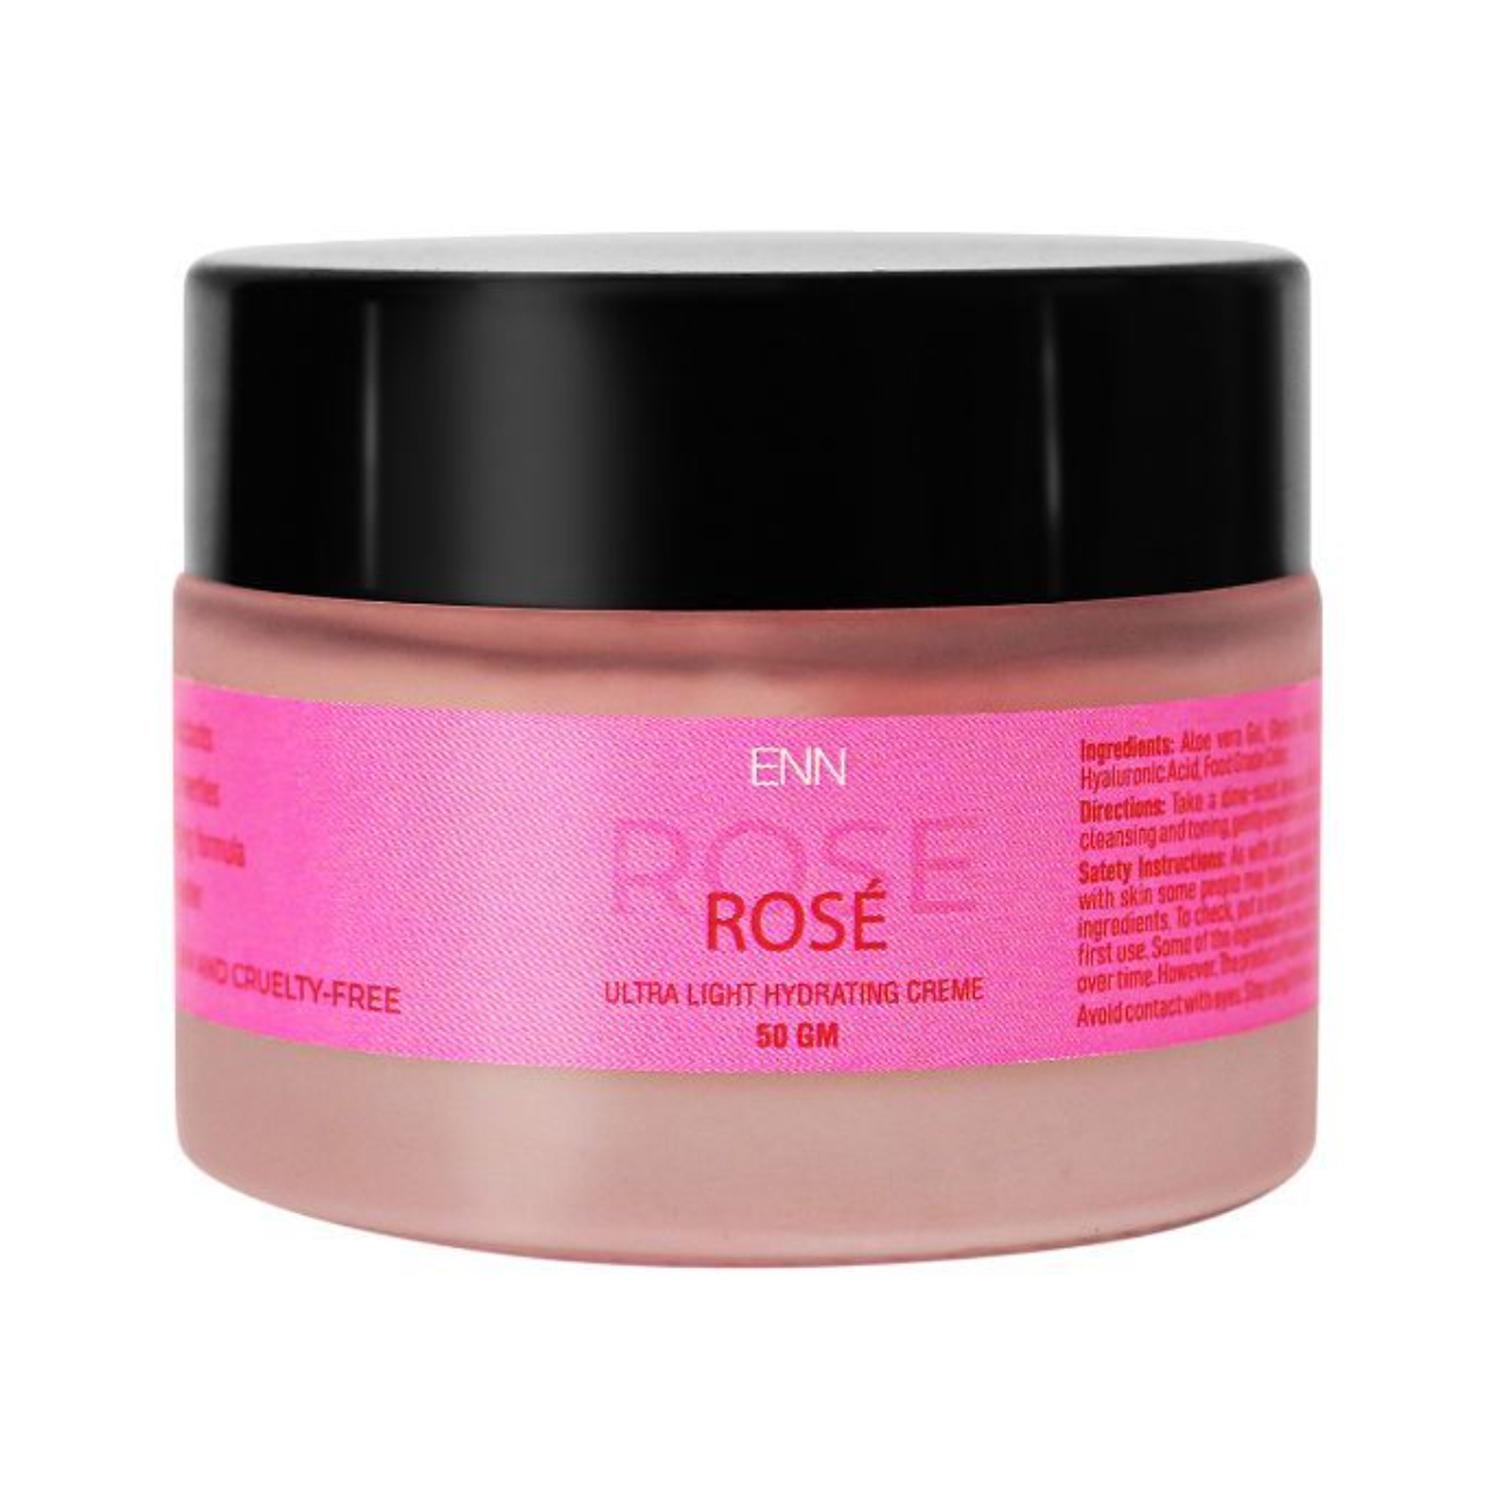 ENN Rose Ultra Light Hydrating Creme (50g)